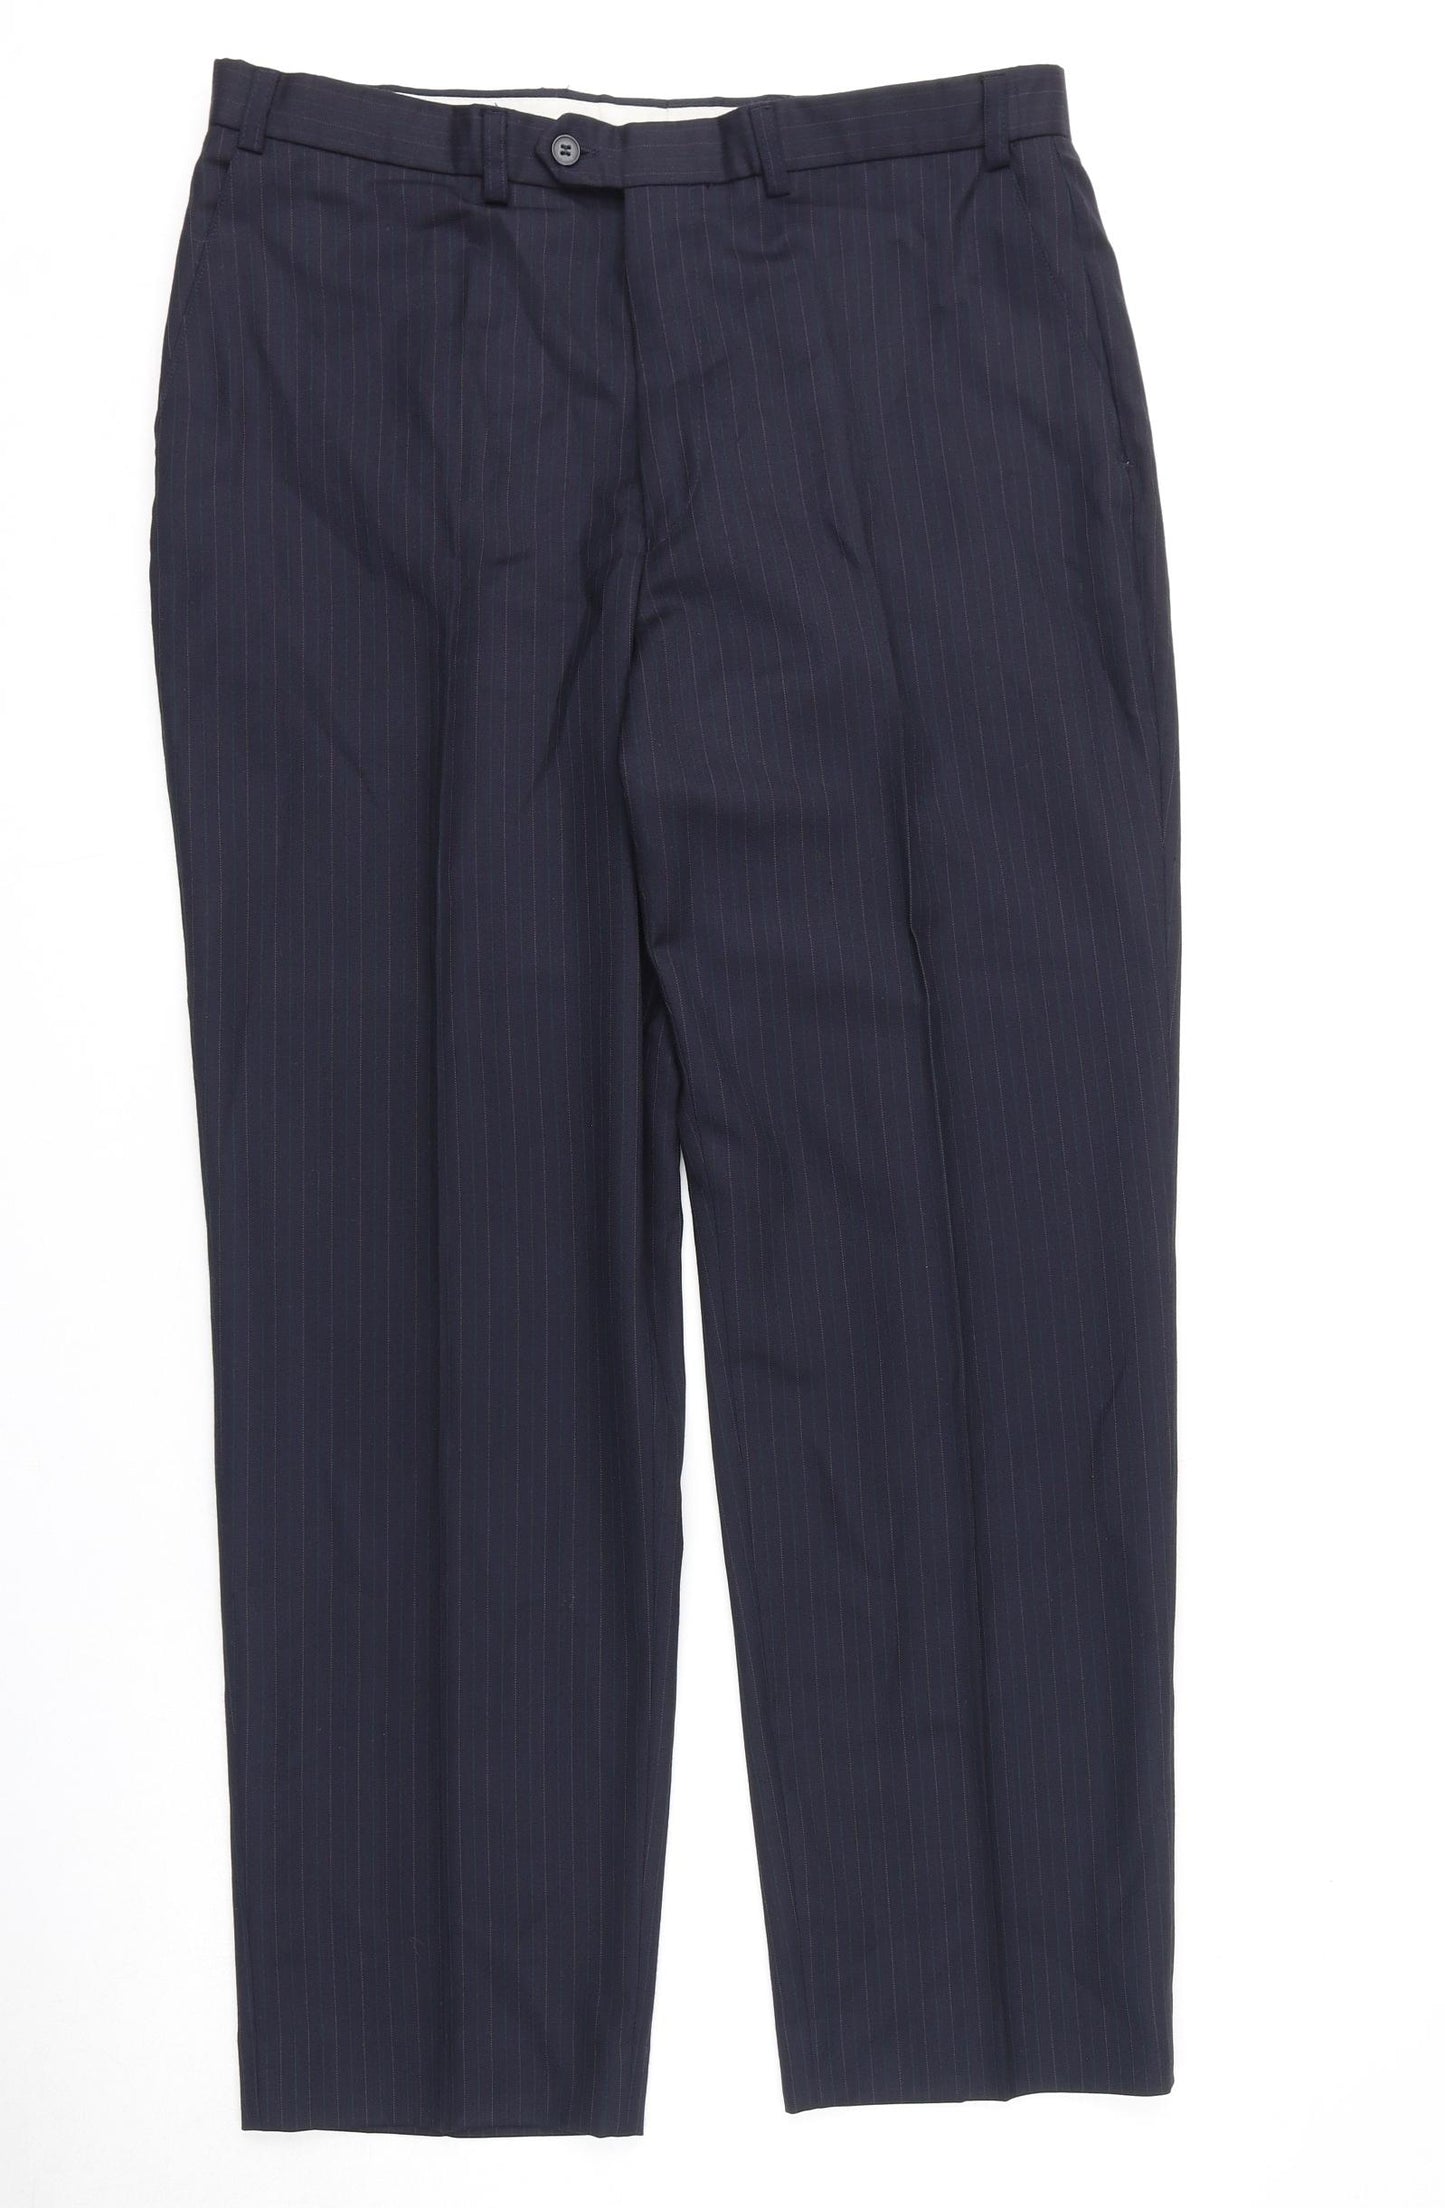 St Michael Mens Blue Striped Wool Dress Pants Trousers Size 36 in L31 in Regular Zip